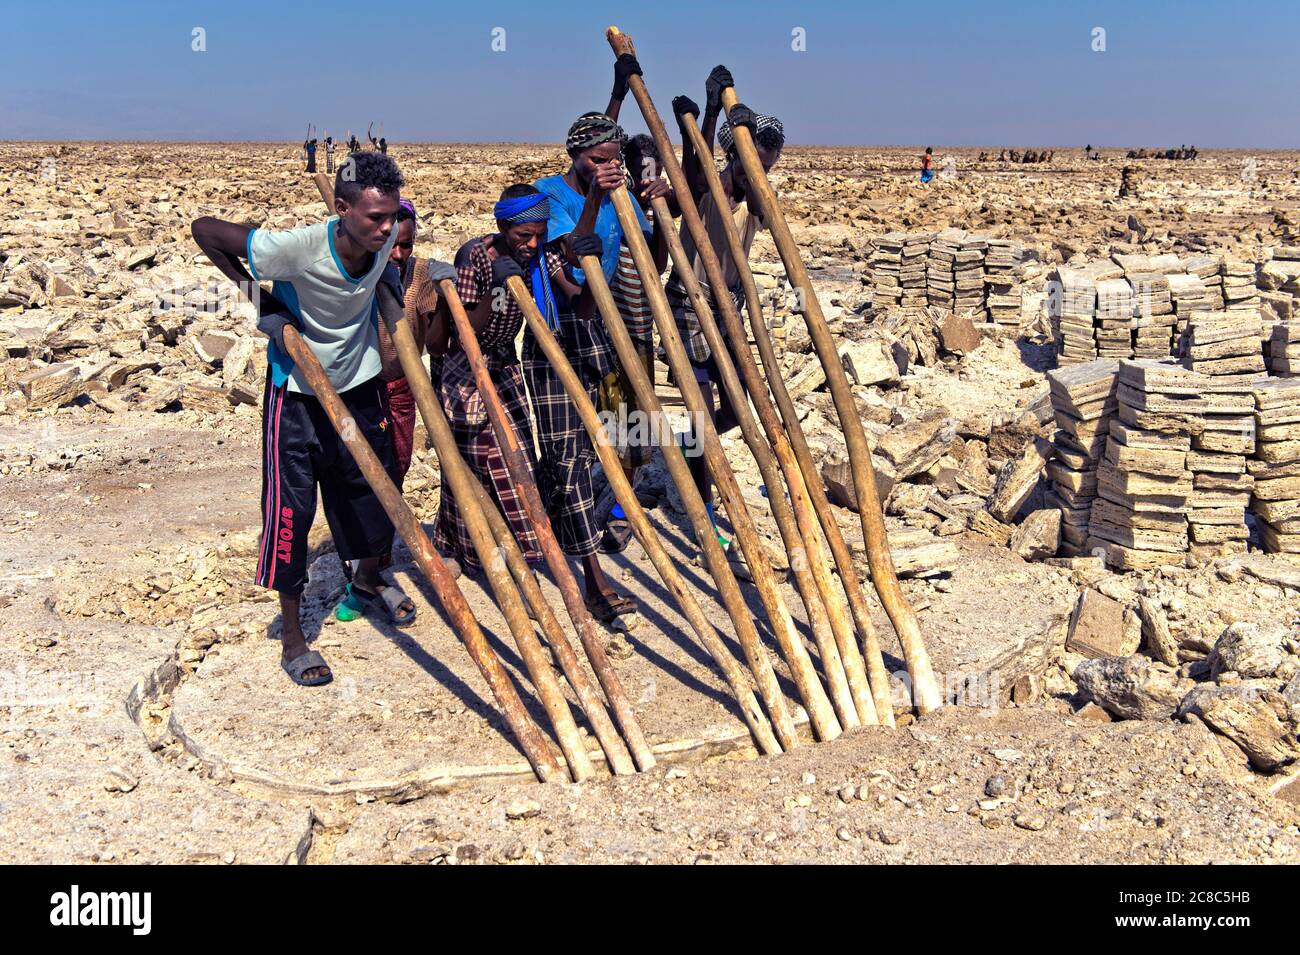 Salt workers breaking with wooden crowbars salt blocks from the salt crust of Lake Assale, near Hamadela, Danakil Depression, Afar region, Ethiopia Stock Photo